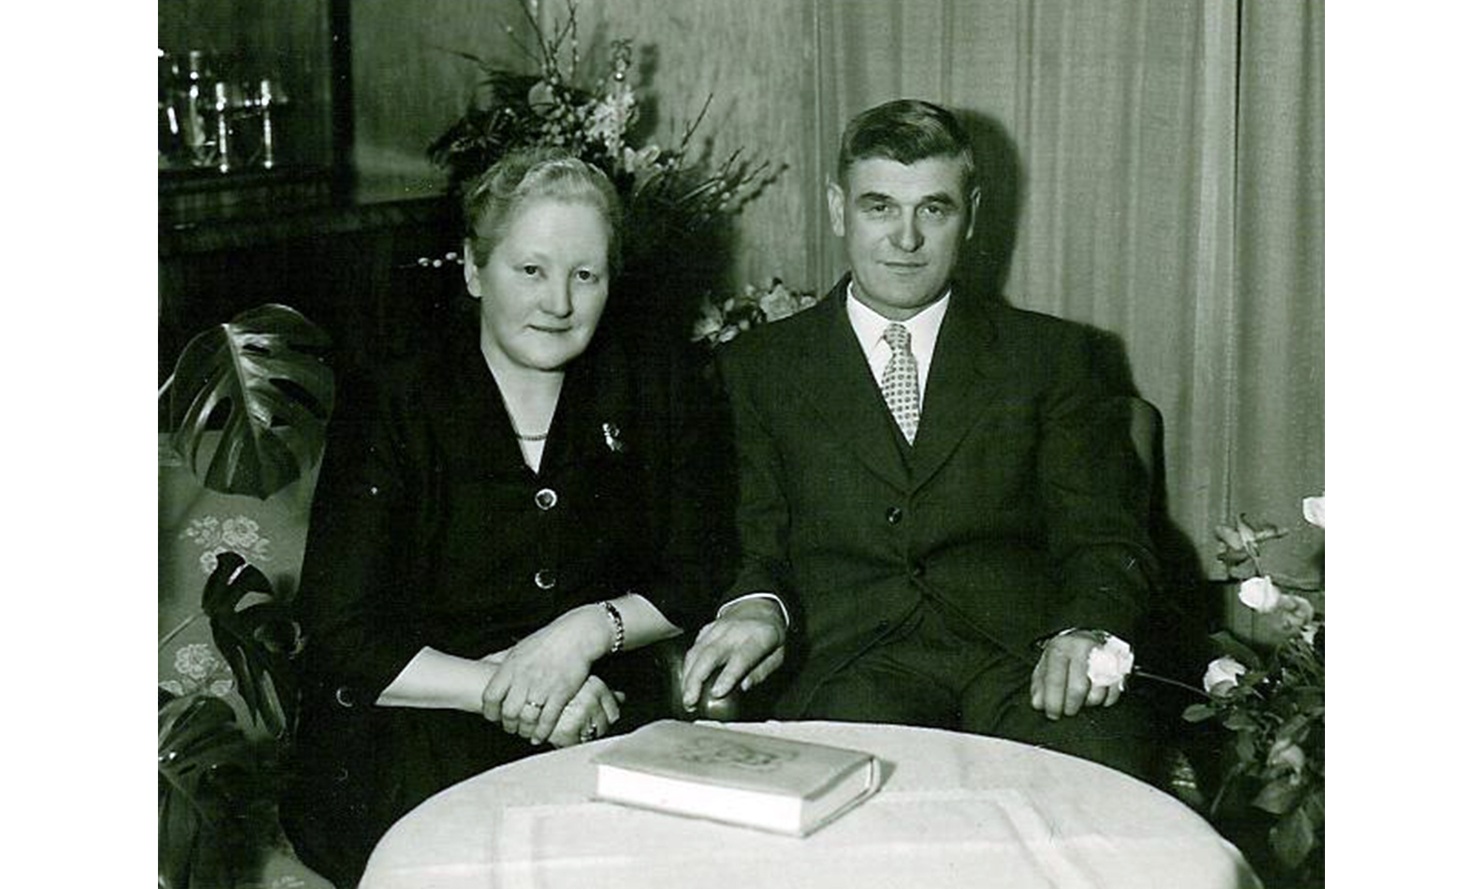 Photo of Marta and Leonhard Lehmann